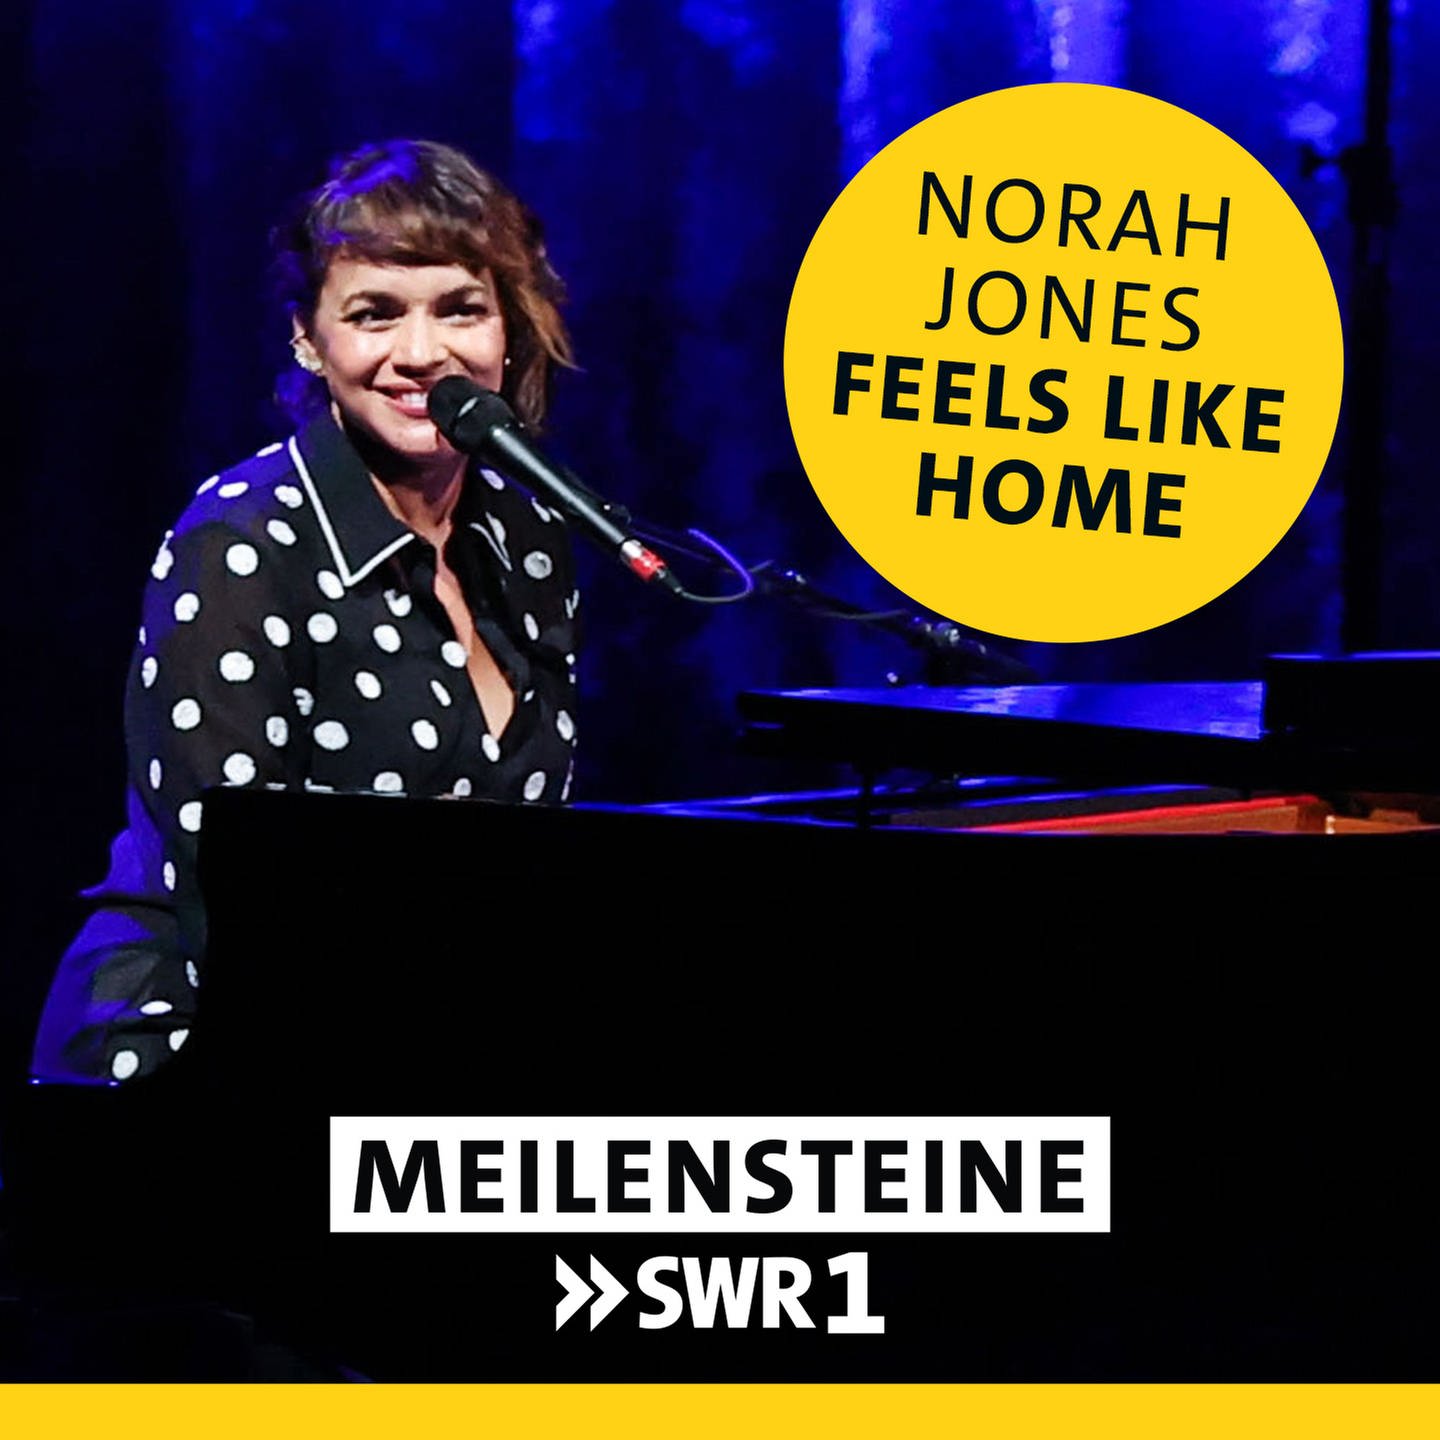 Norah Jones – "Feels Like Home"